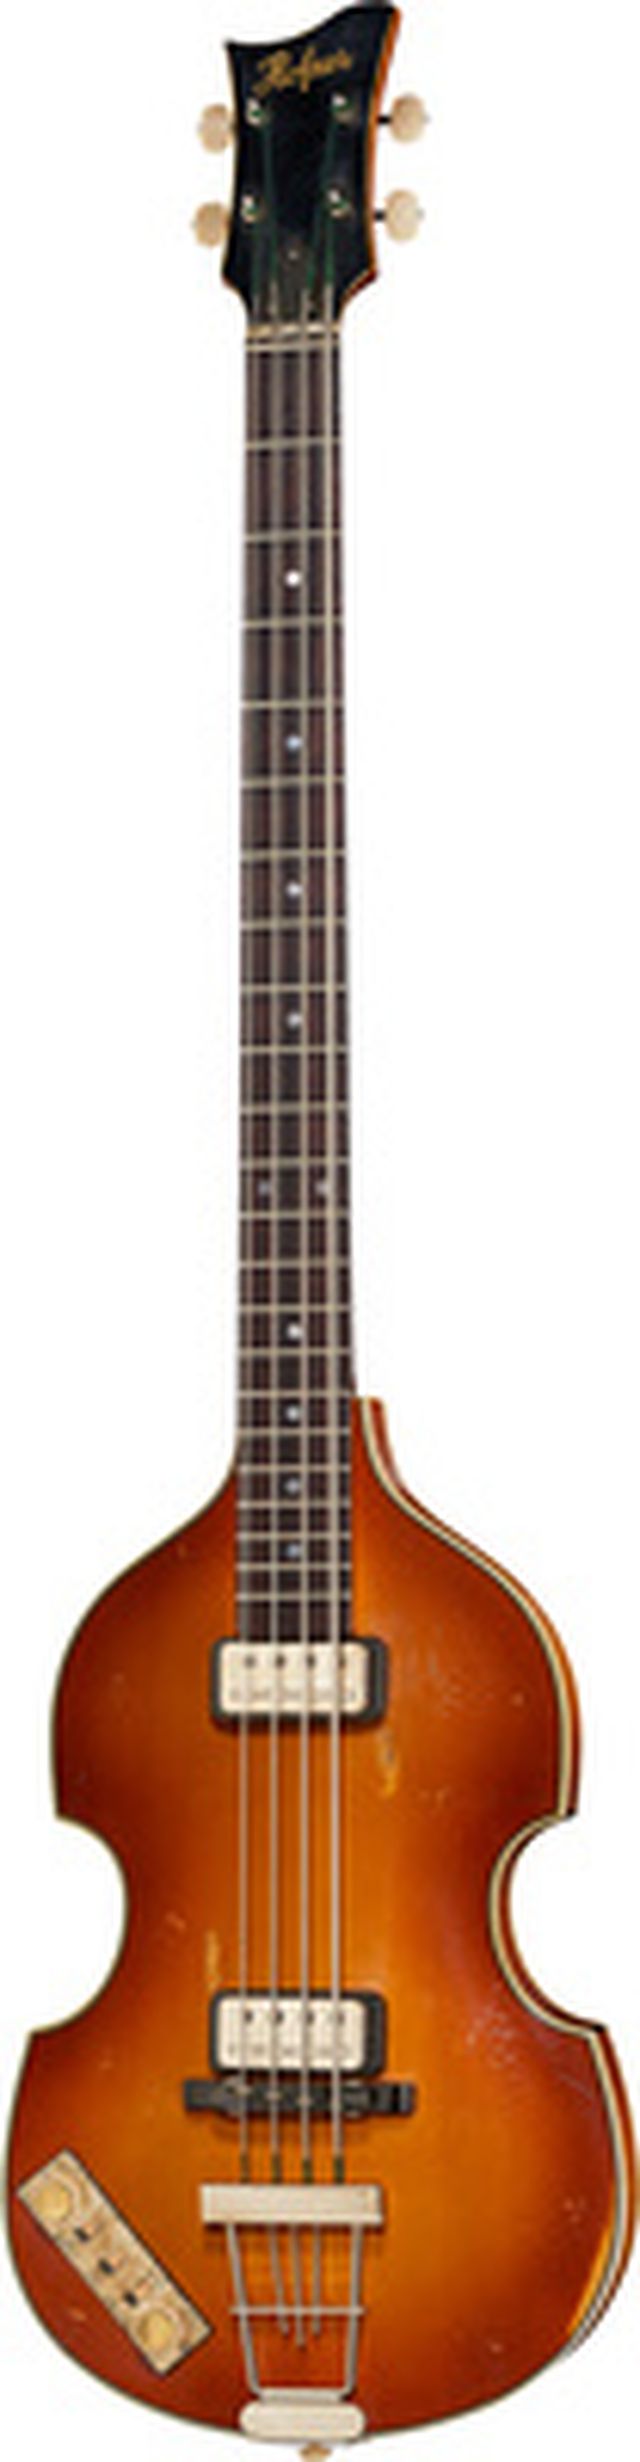 Höfner Violin Bass 500/1 Relic 63 LH